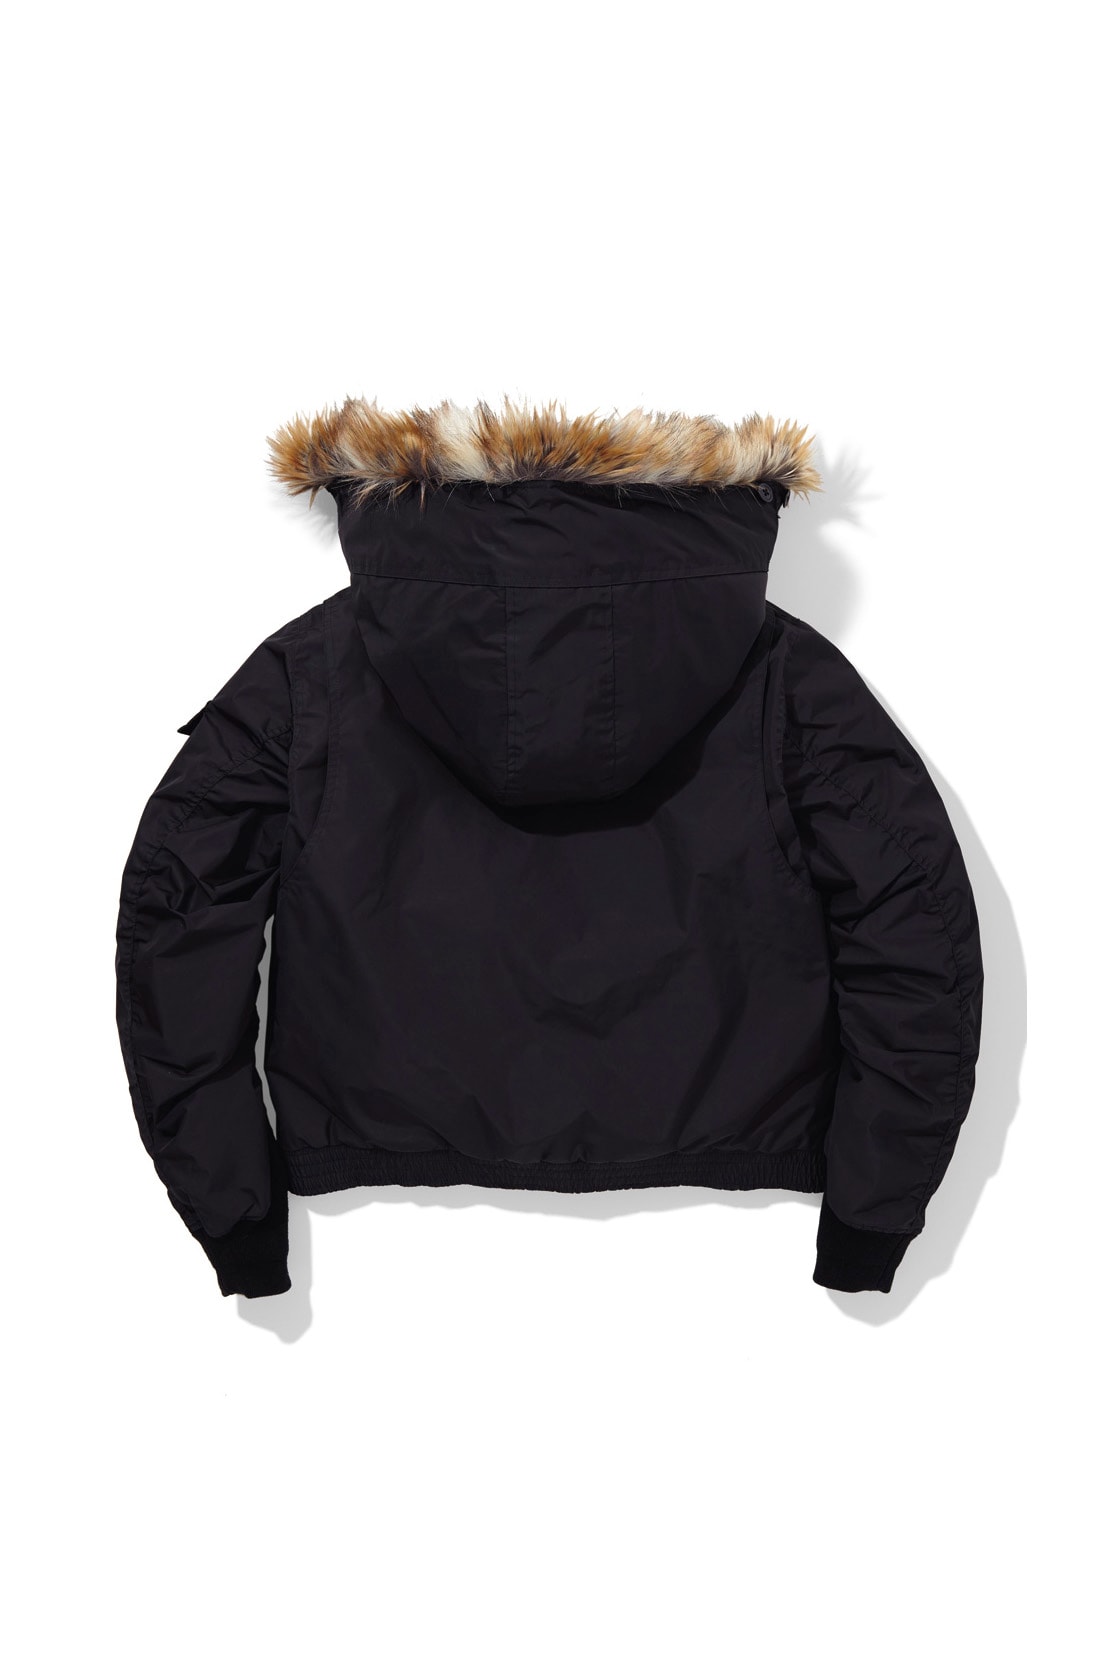 NEIGHBORHOOD x Burton Release Winter 2017 Jackets Snowboard Snowboarding Slopes Shred Outerwear Cold weather streetwear